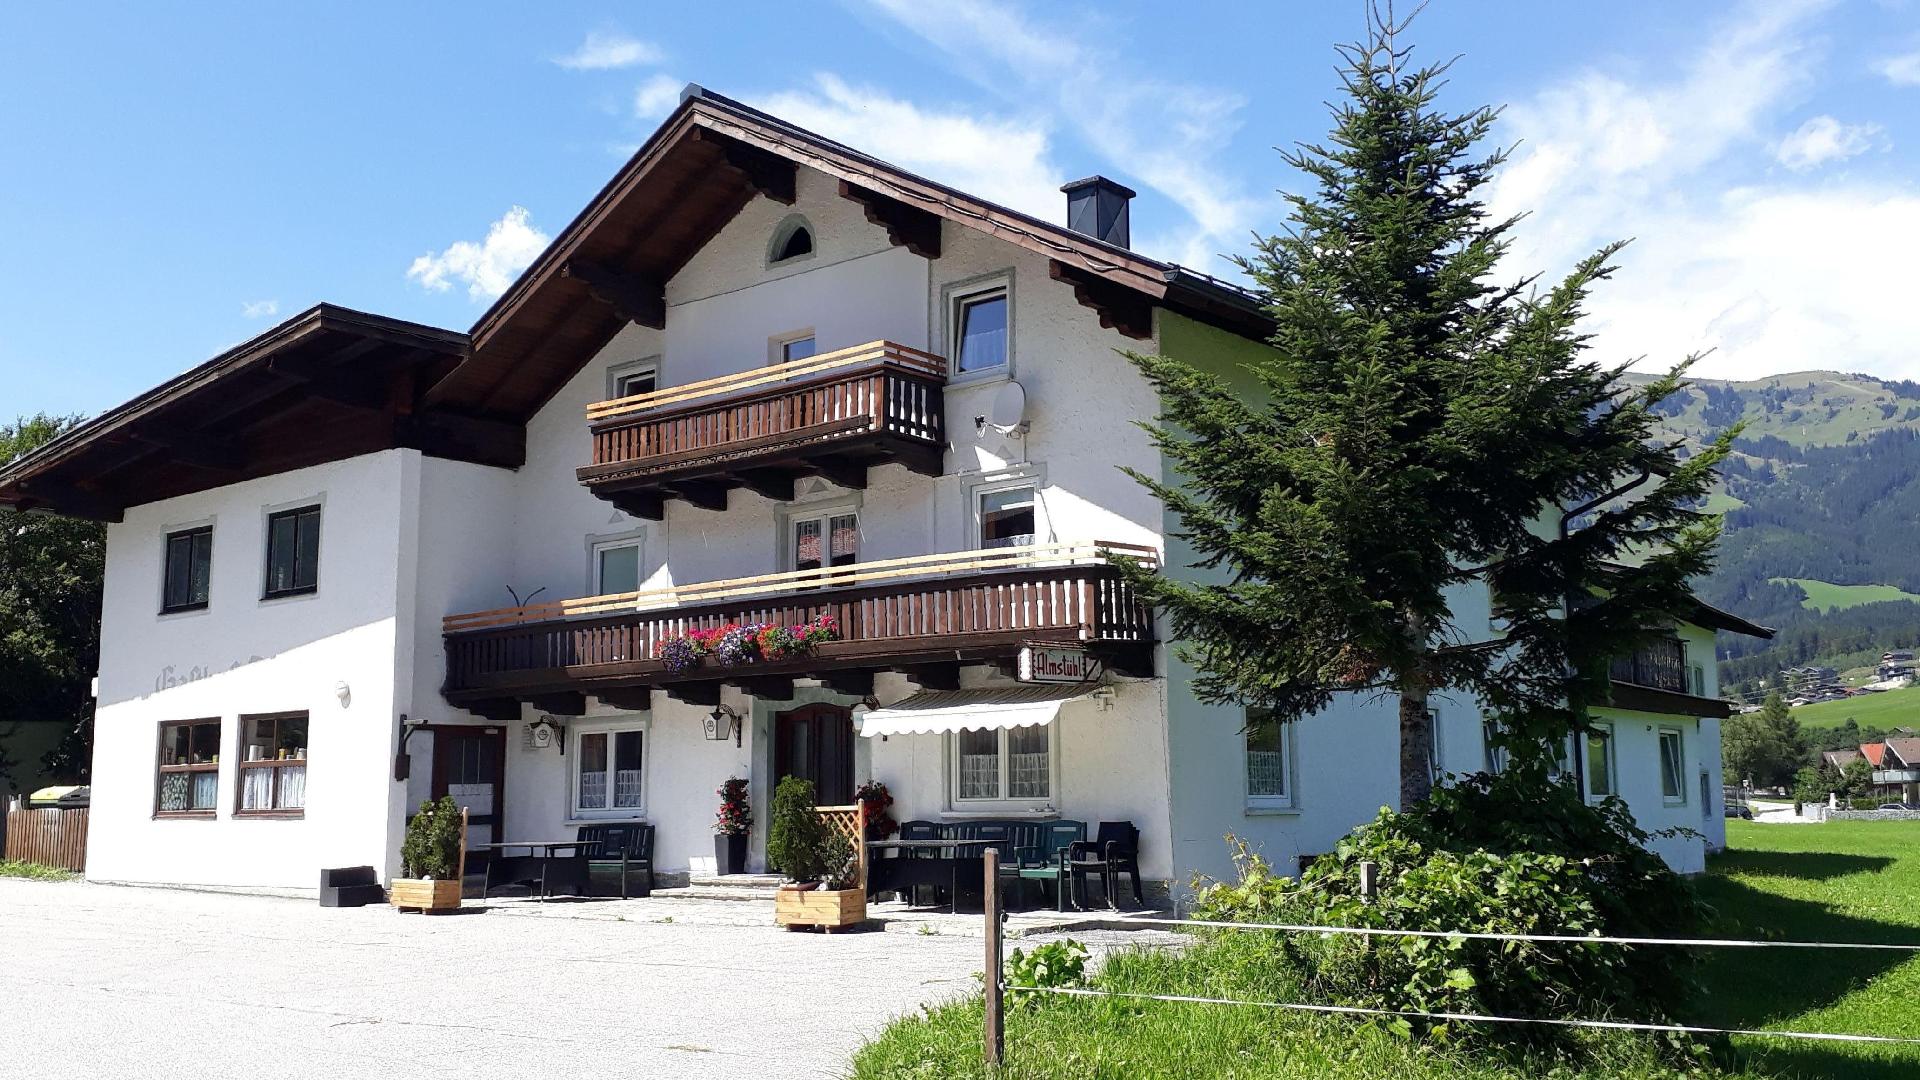 Ferienhaus Dankl in Hollersbach  in Ãsterreich